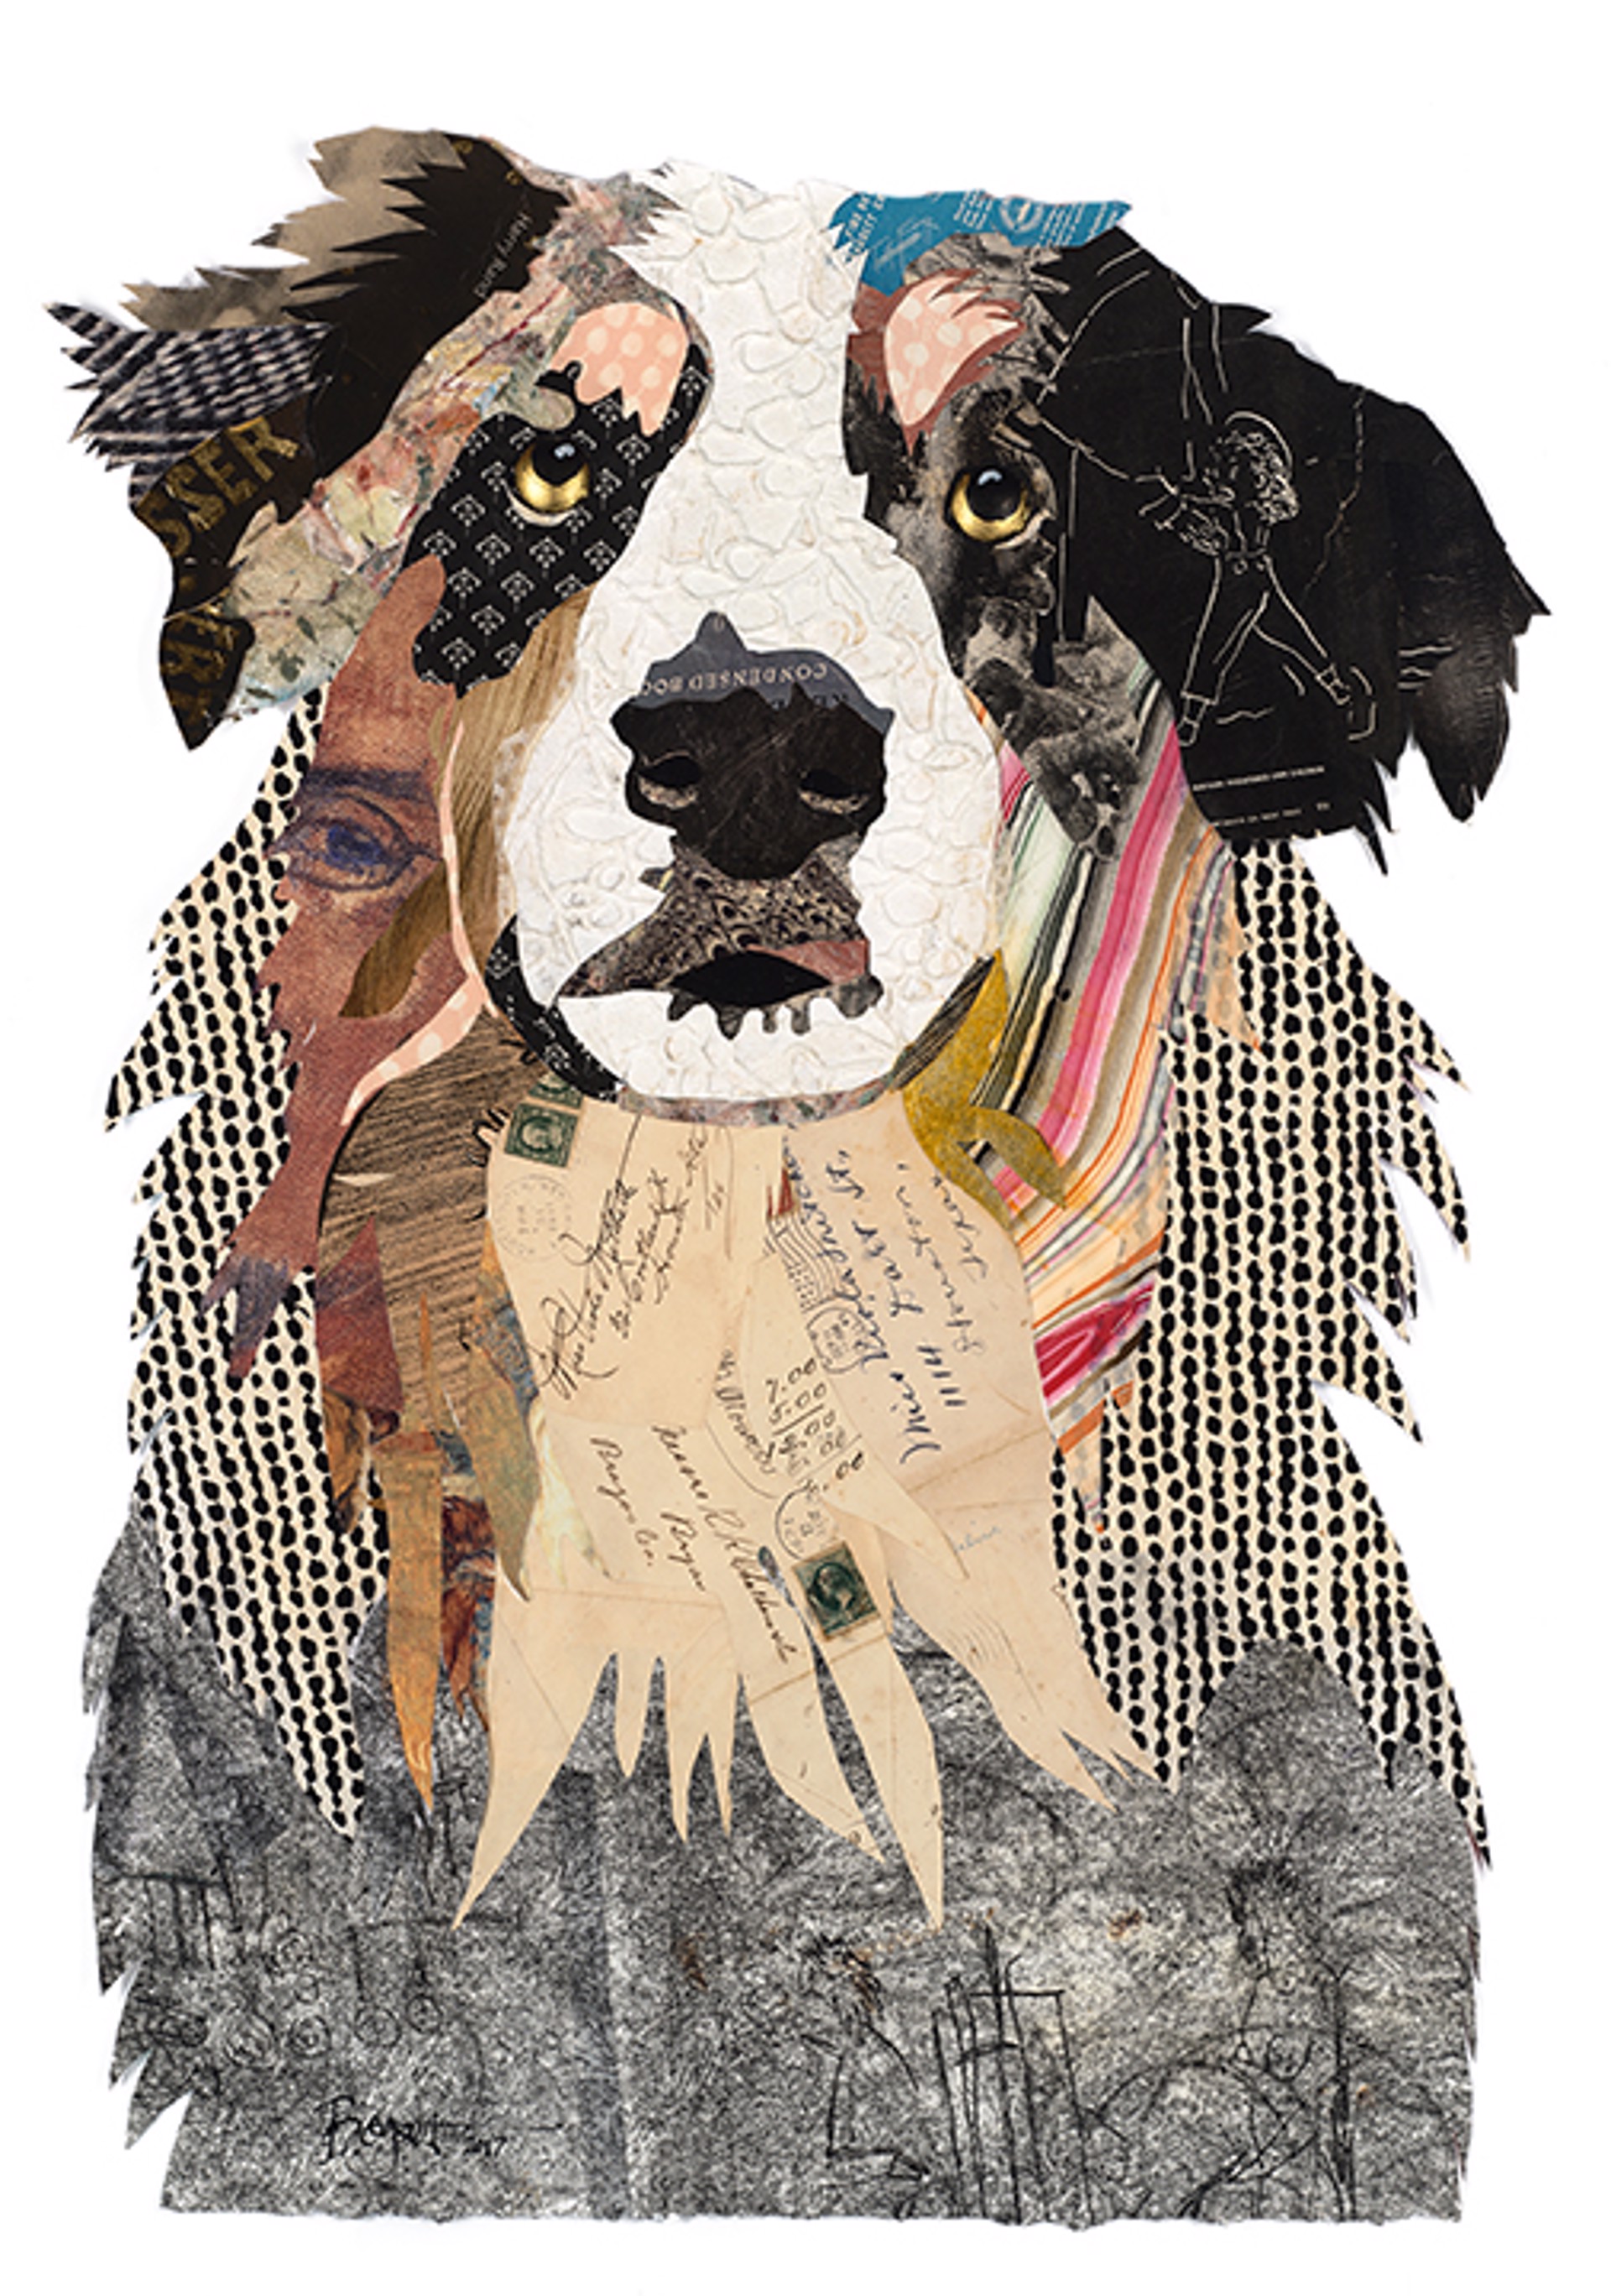 Australian Shepherd by Brenda Bogart - Prints